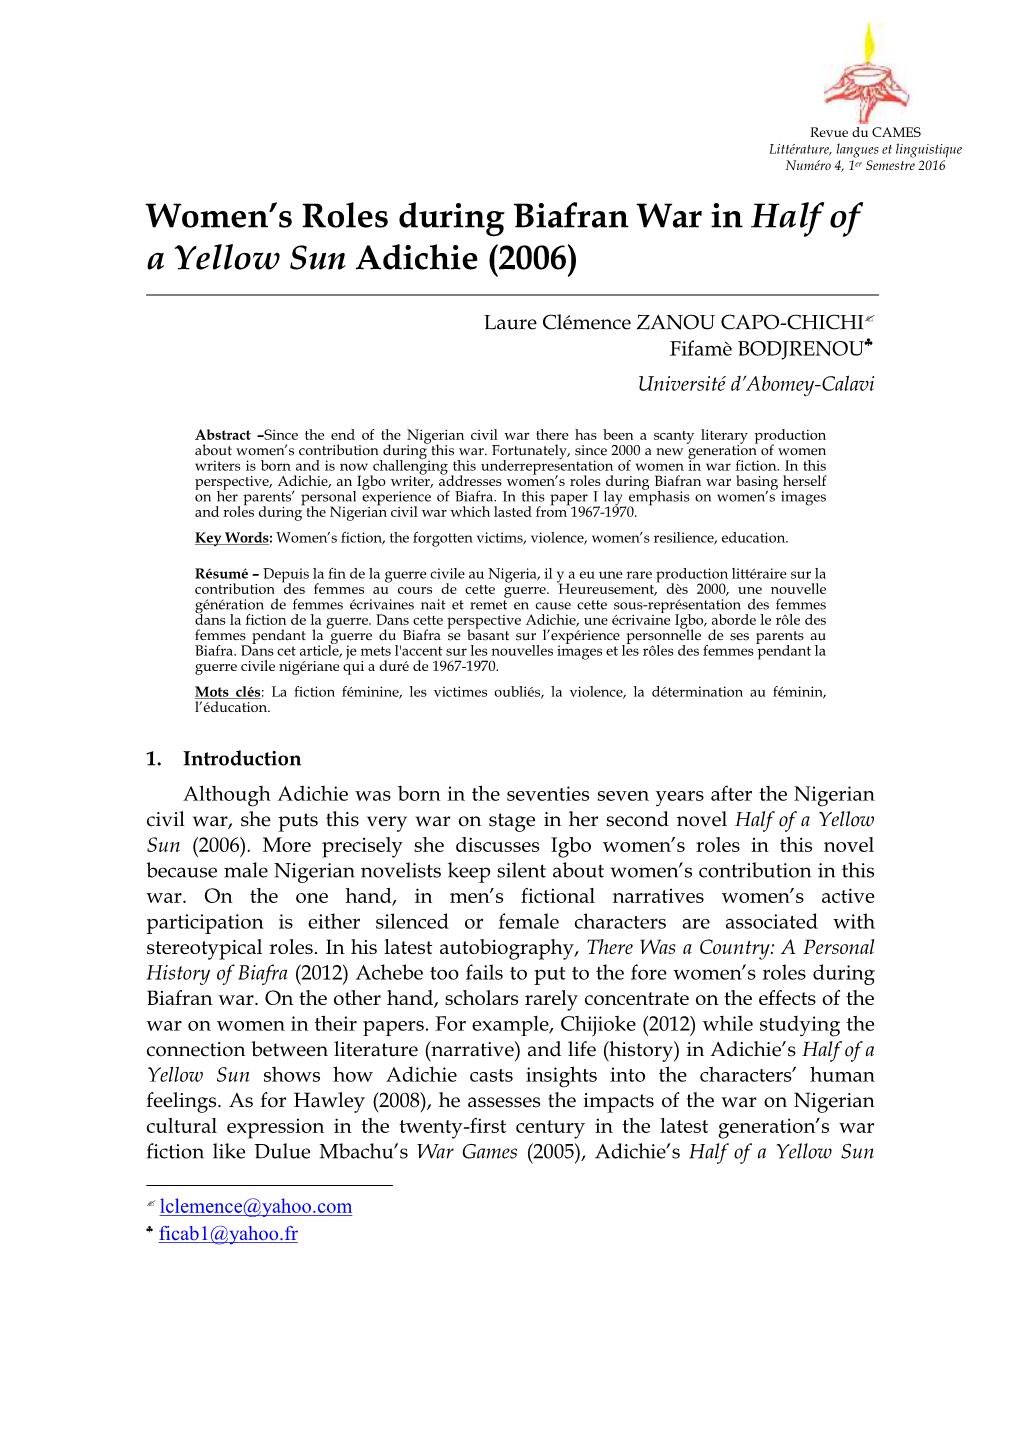 Women's Roles During Biafran War in Half of a Yellow Sun Adichie